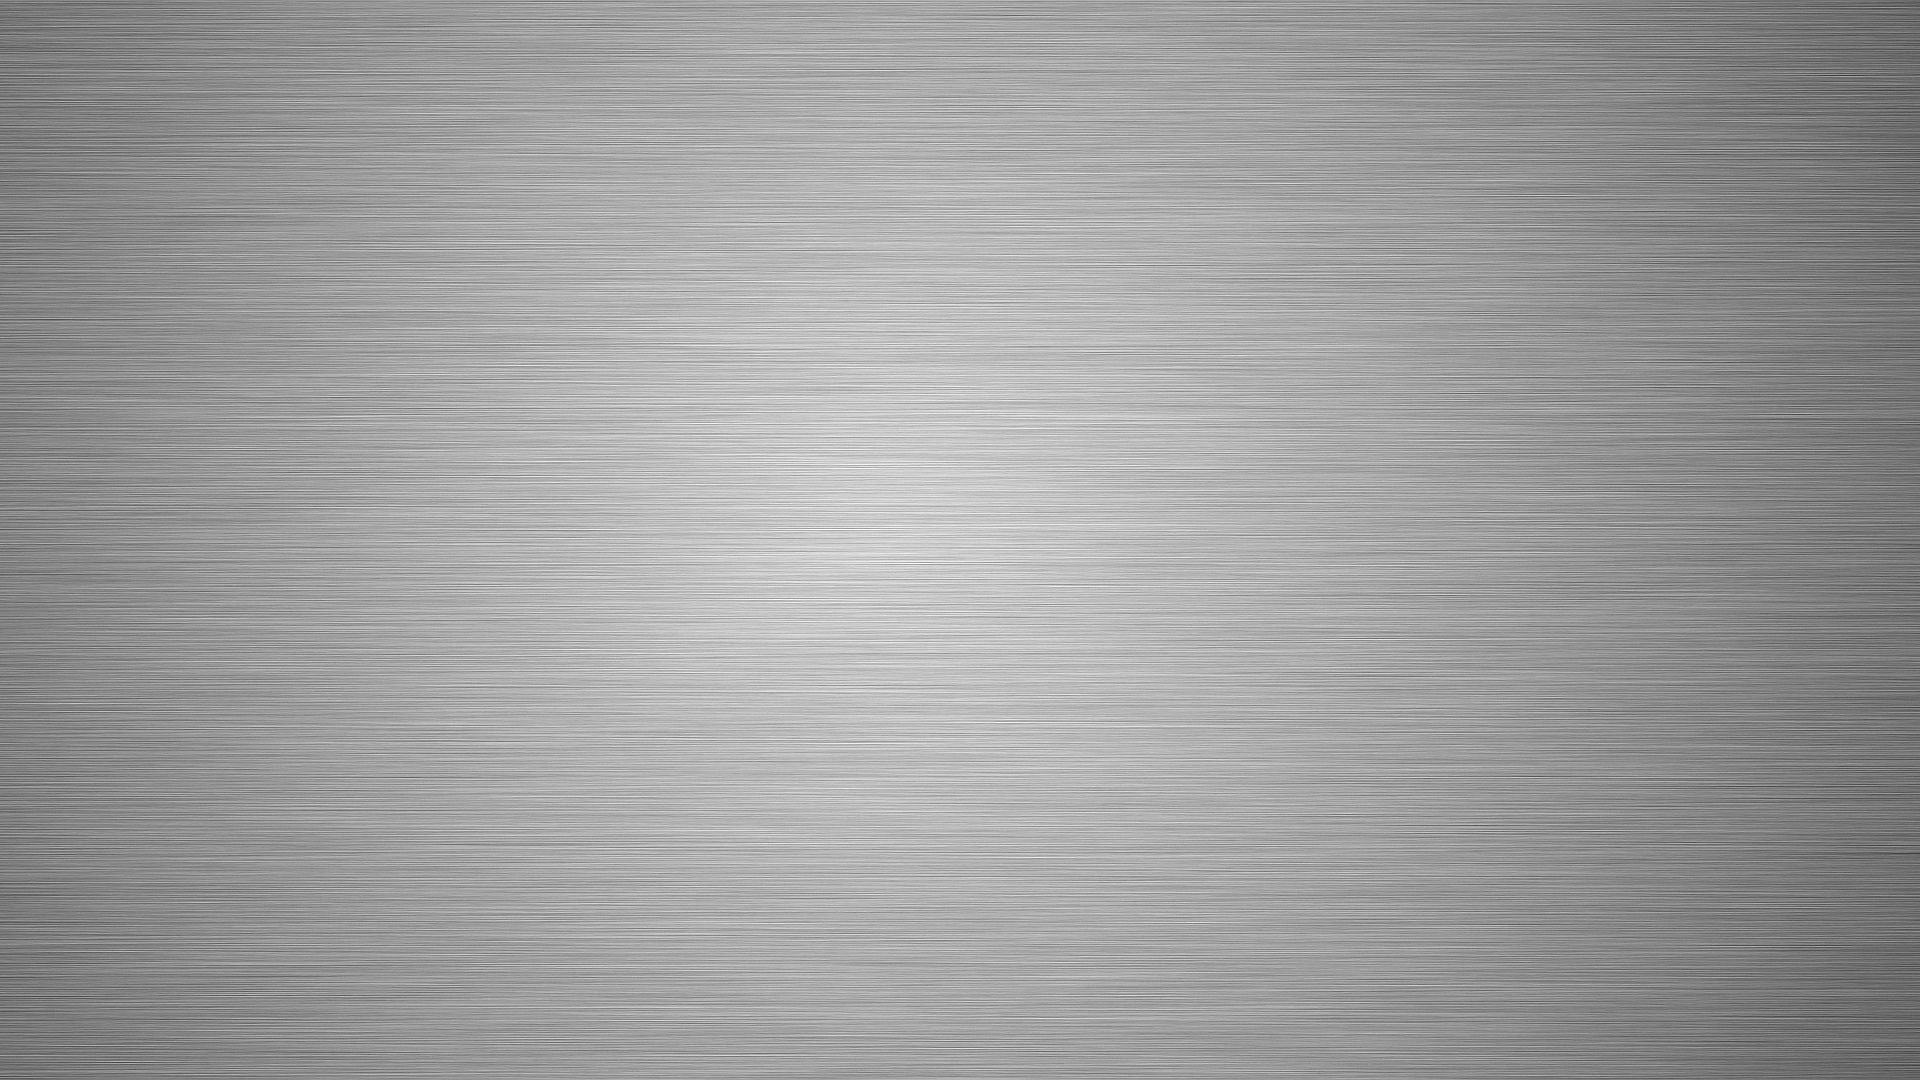 1920x1080 Aluminum Wallpaper for Desktop | PixelsTalk.Net